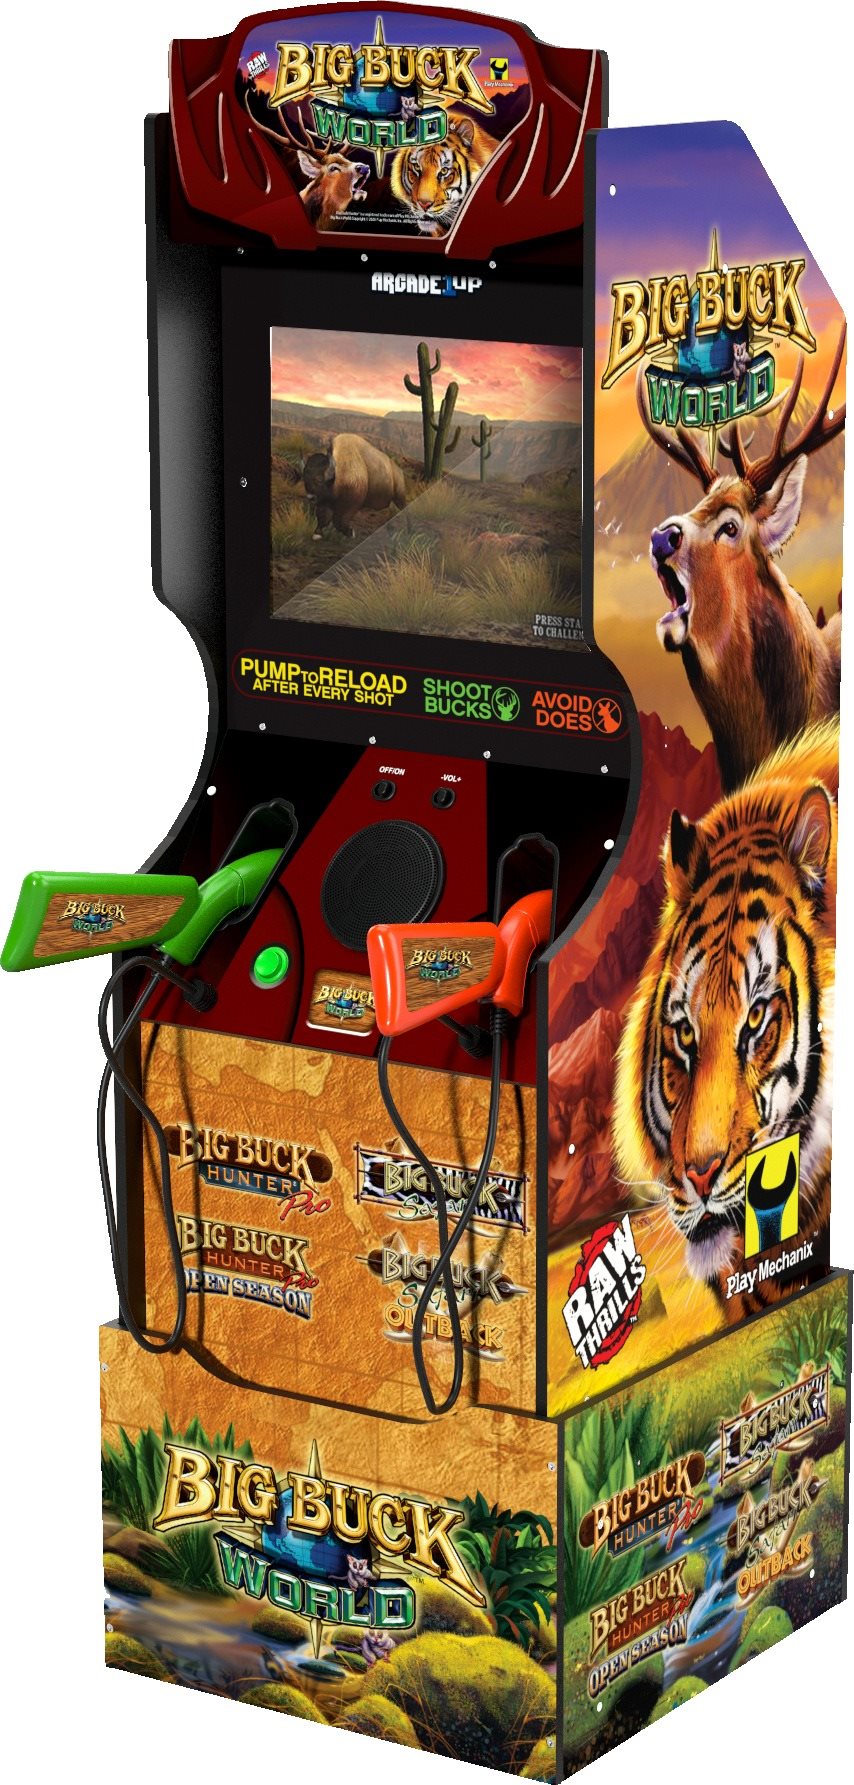 Retro játékkonzol Arcade1up Big Buck World